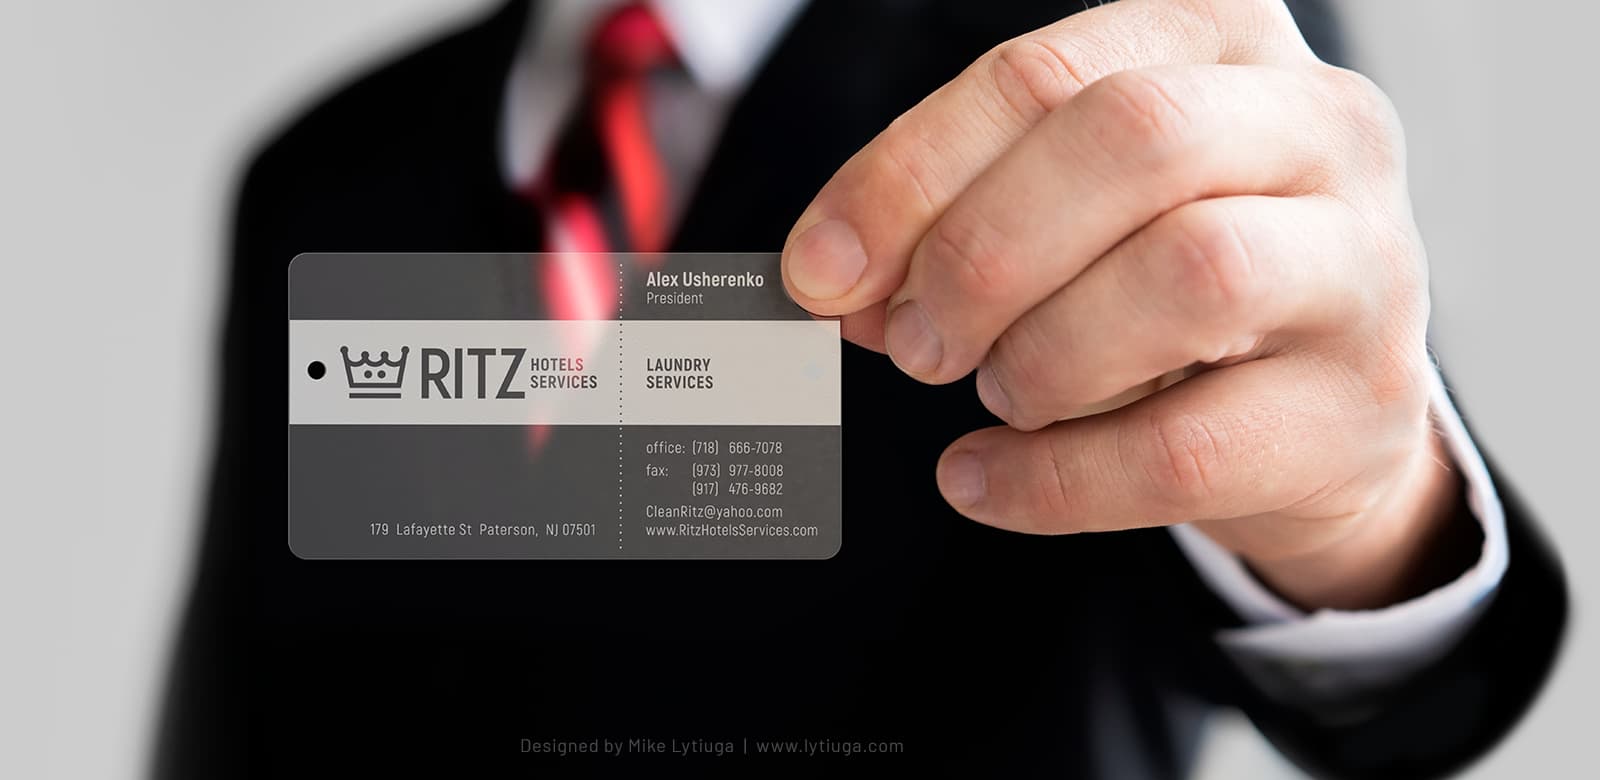 Translucend business card design for RITZ Hotels Services